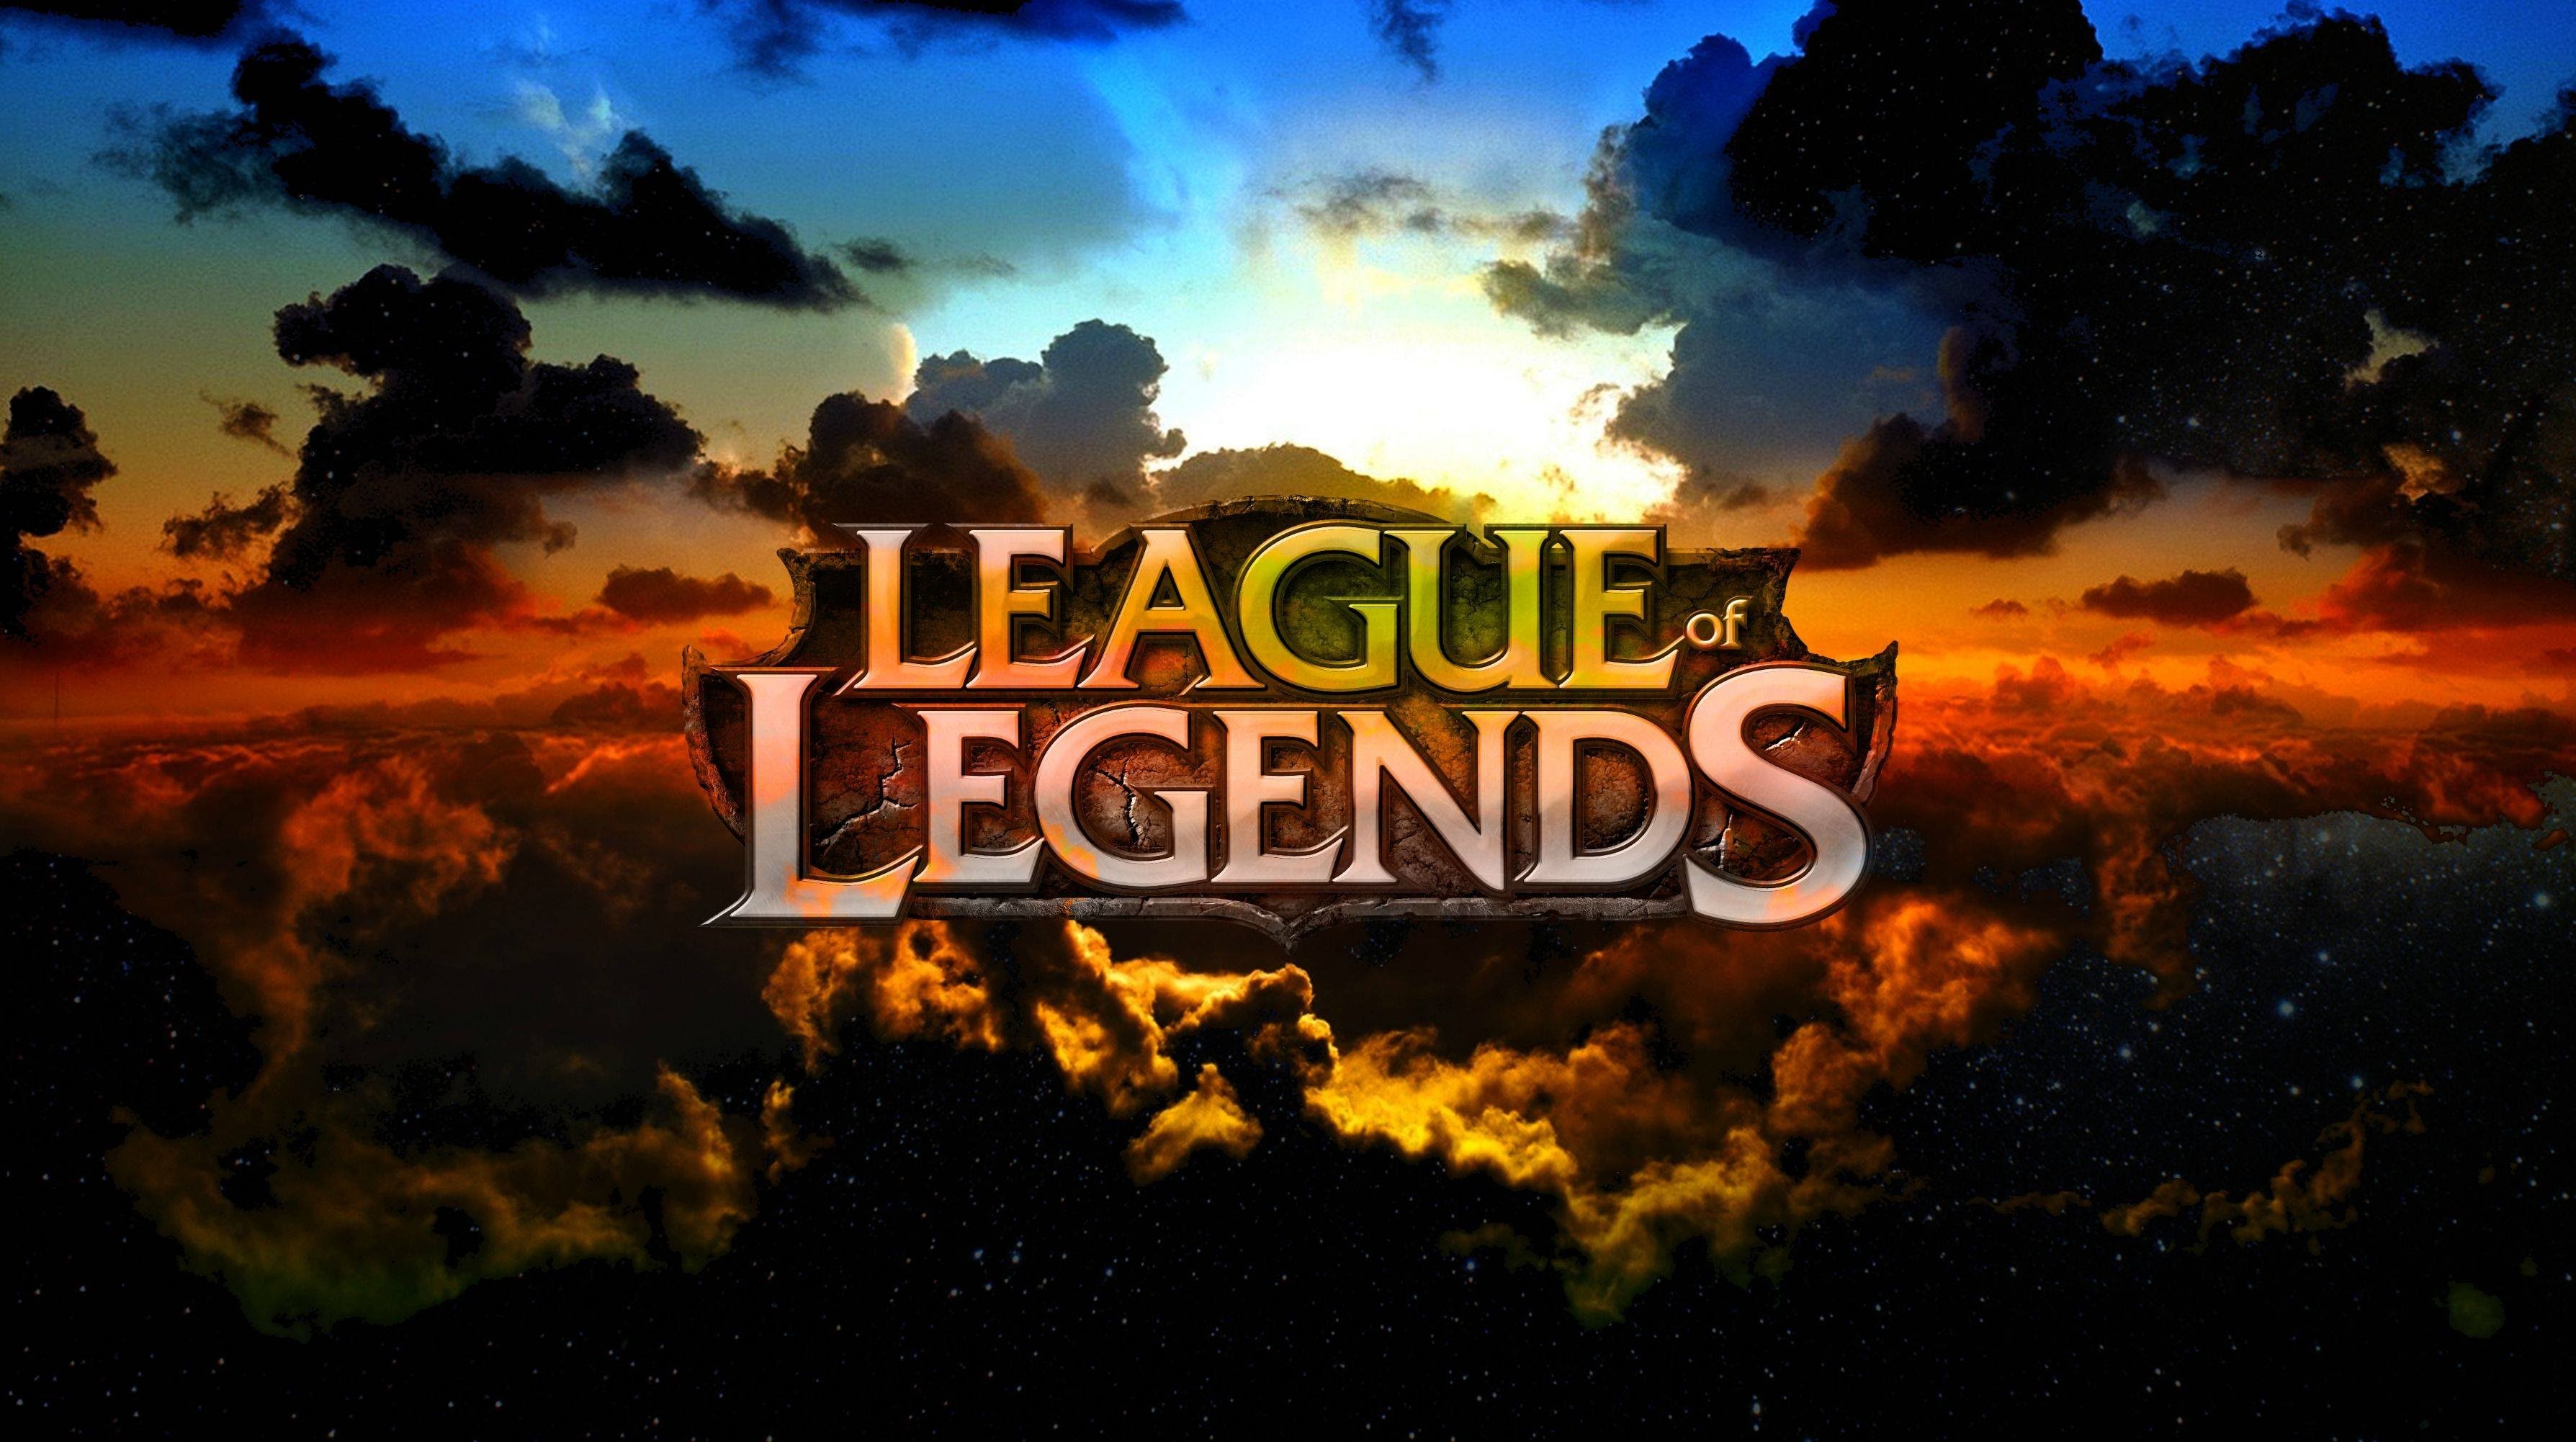 league of legends logo wallpaper,sky,nature,font,cloud,text